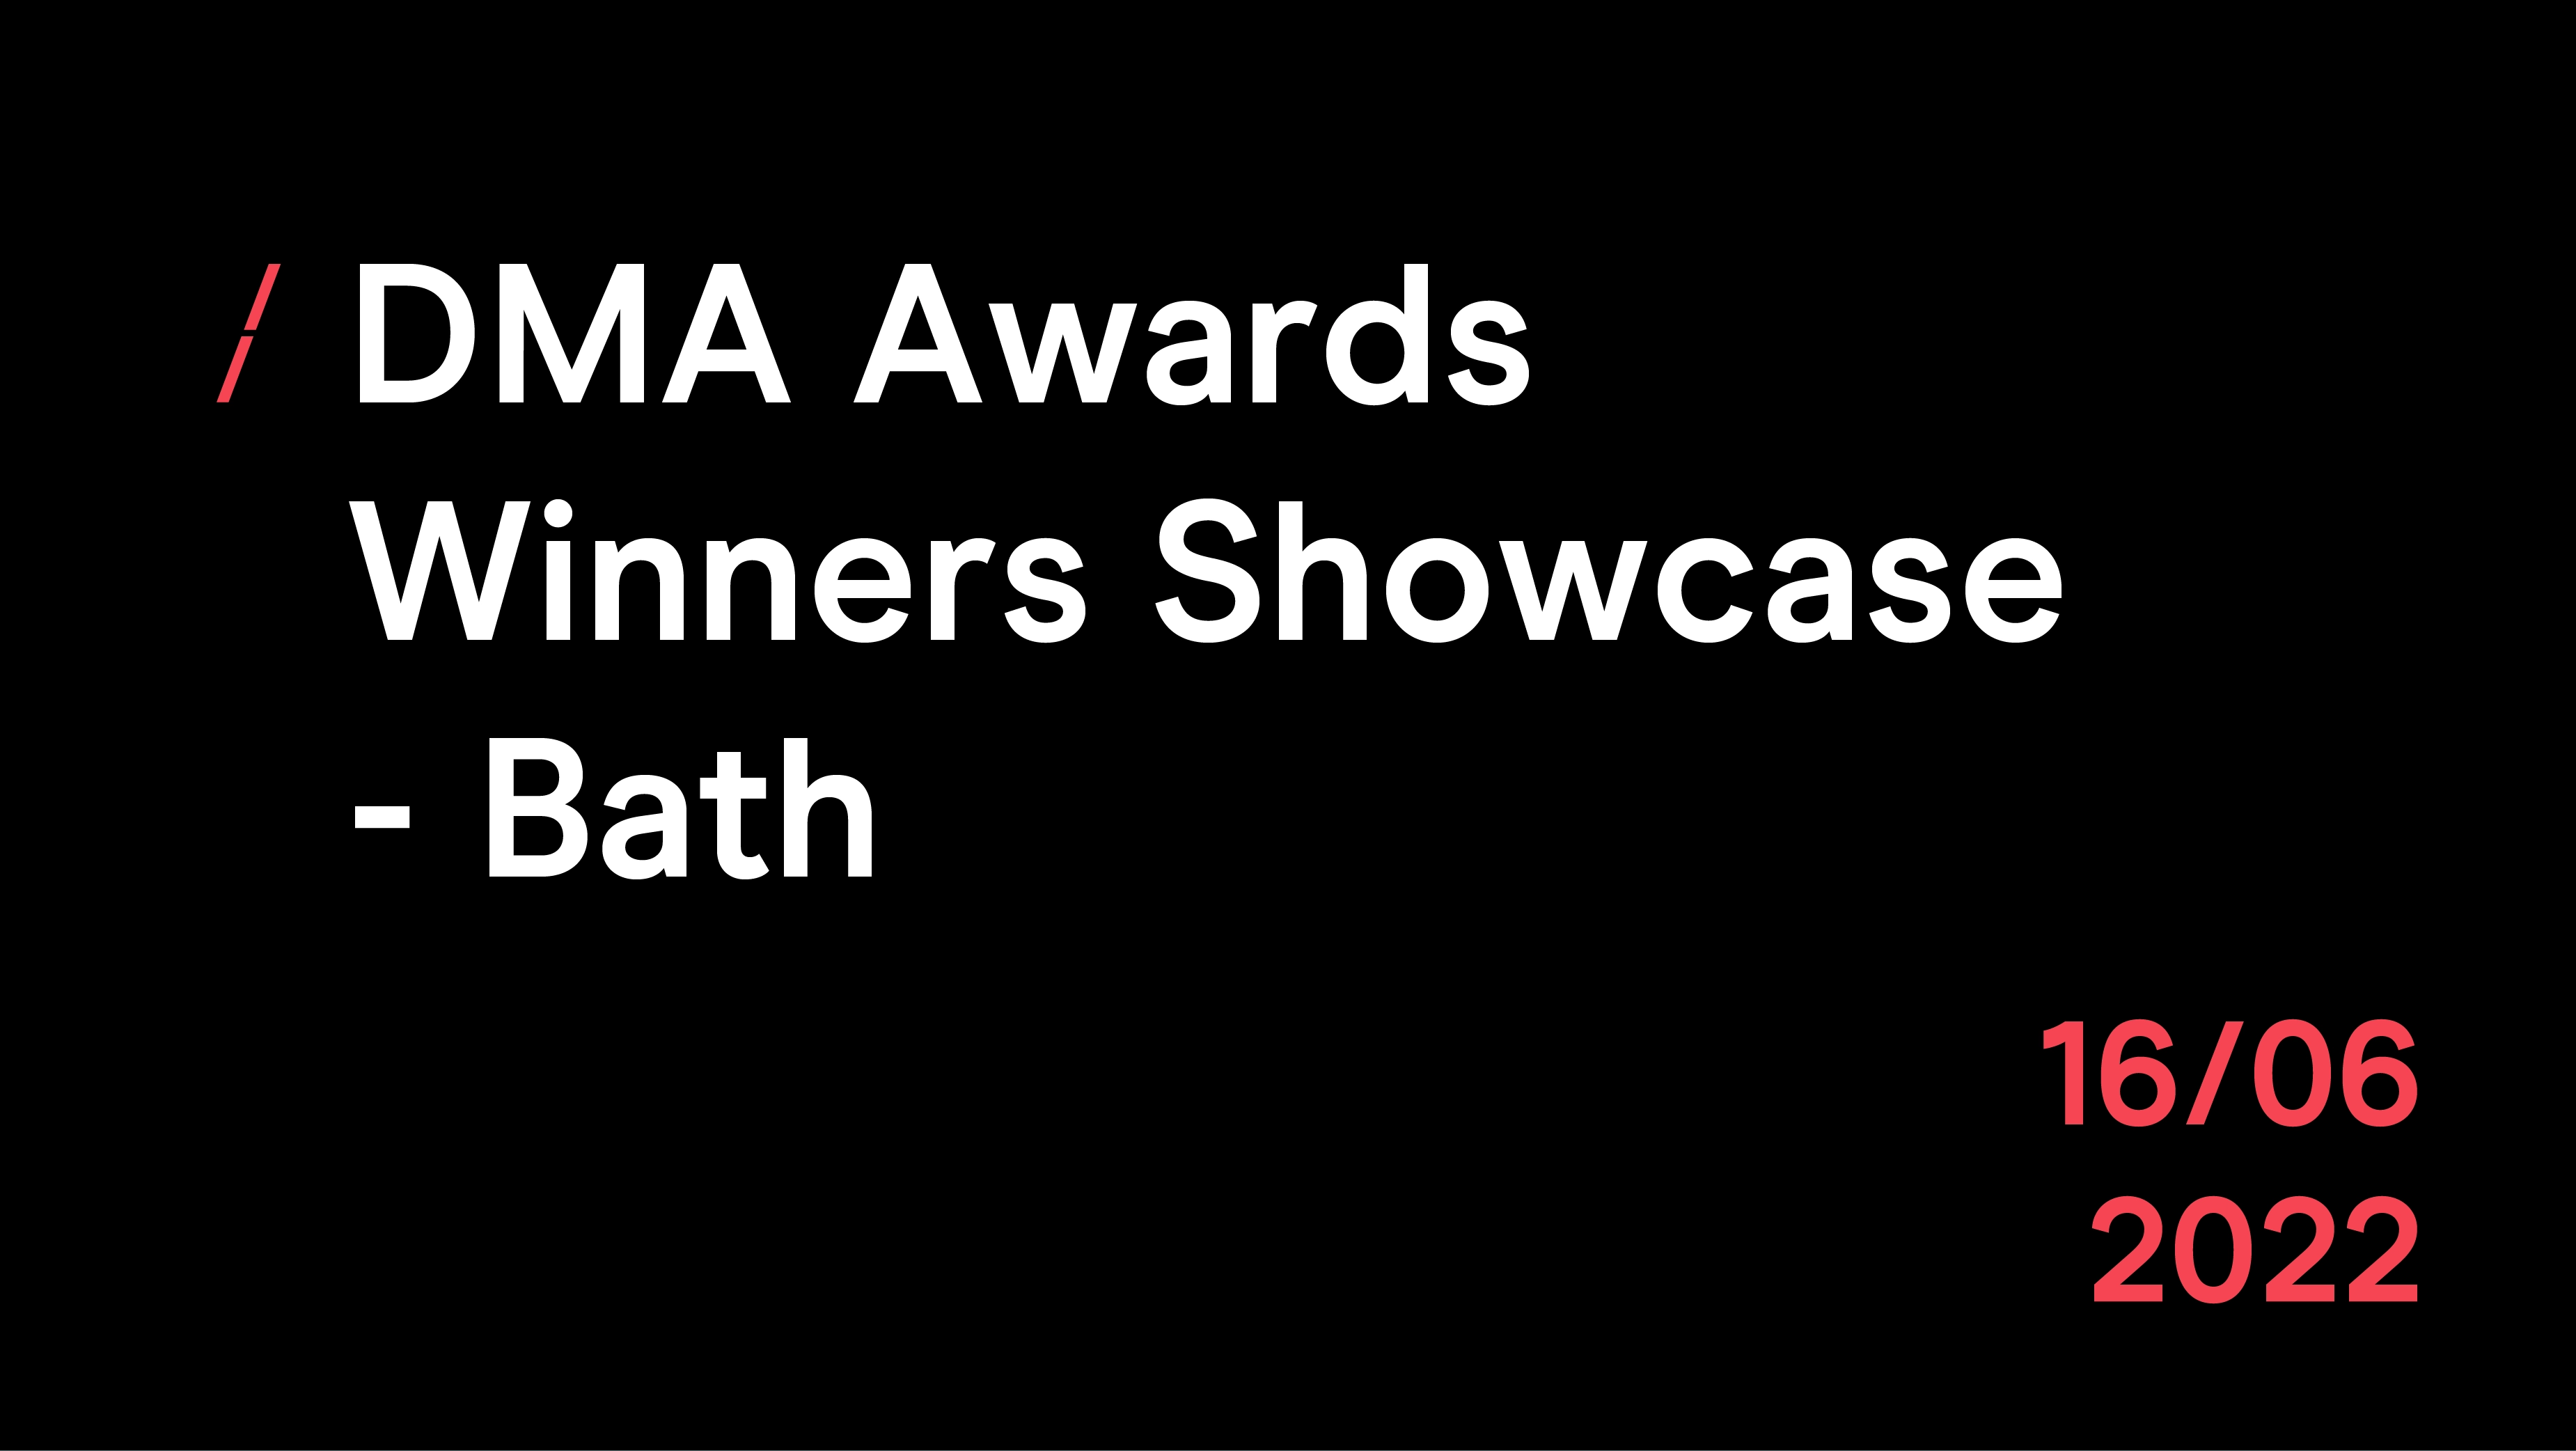 DMA Awards Winners Showcase - Bath_Events.png